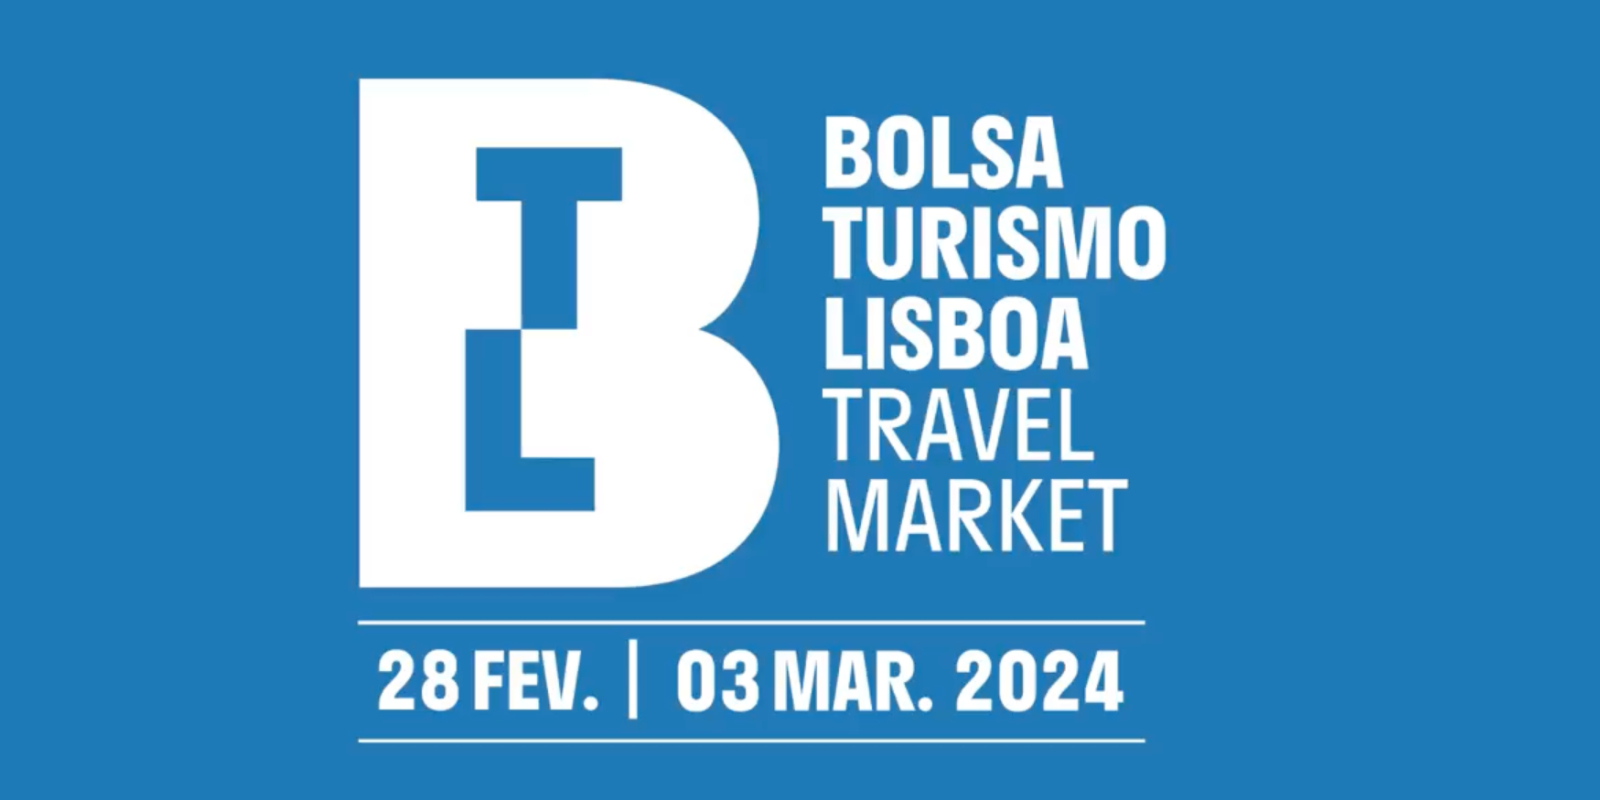 a blue and white logo for the bolsa turismo lisboa travel market